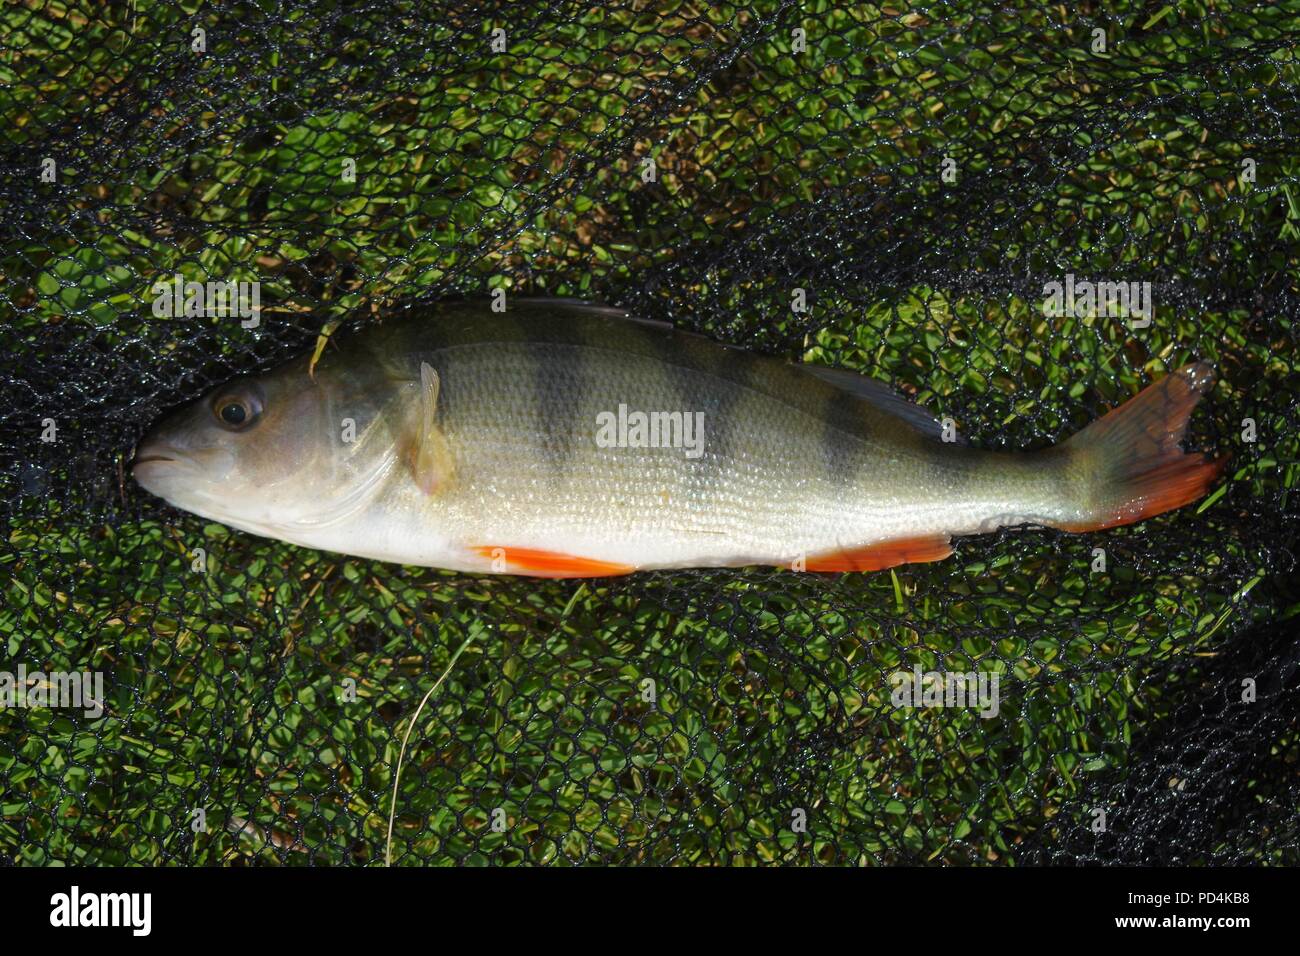 Pesce persico (Perca fluviatilis Foto stock - Alamy